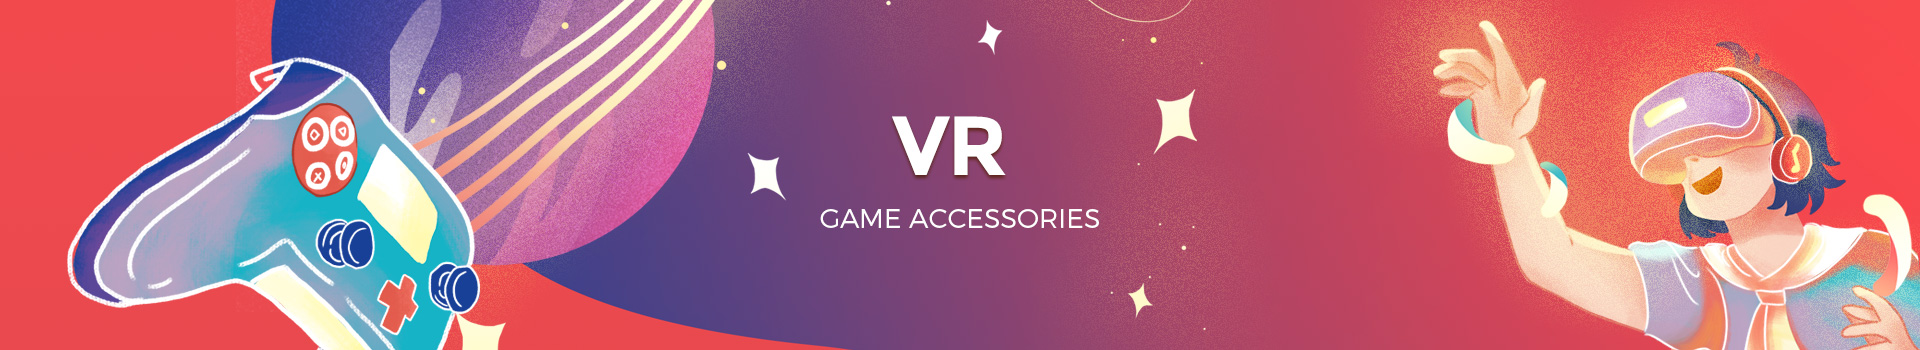 VR Series Accessories